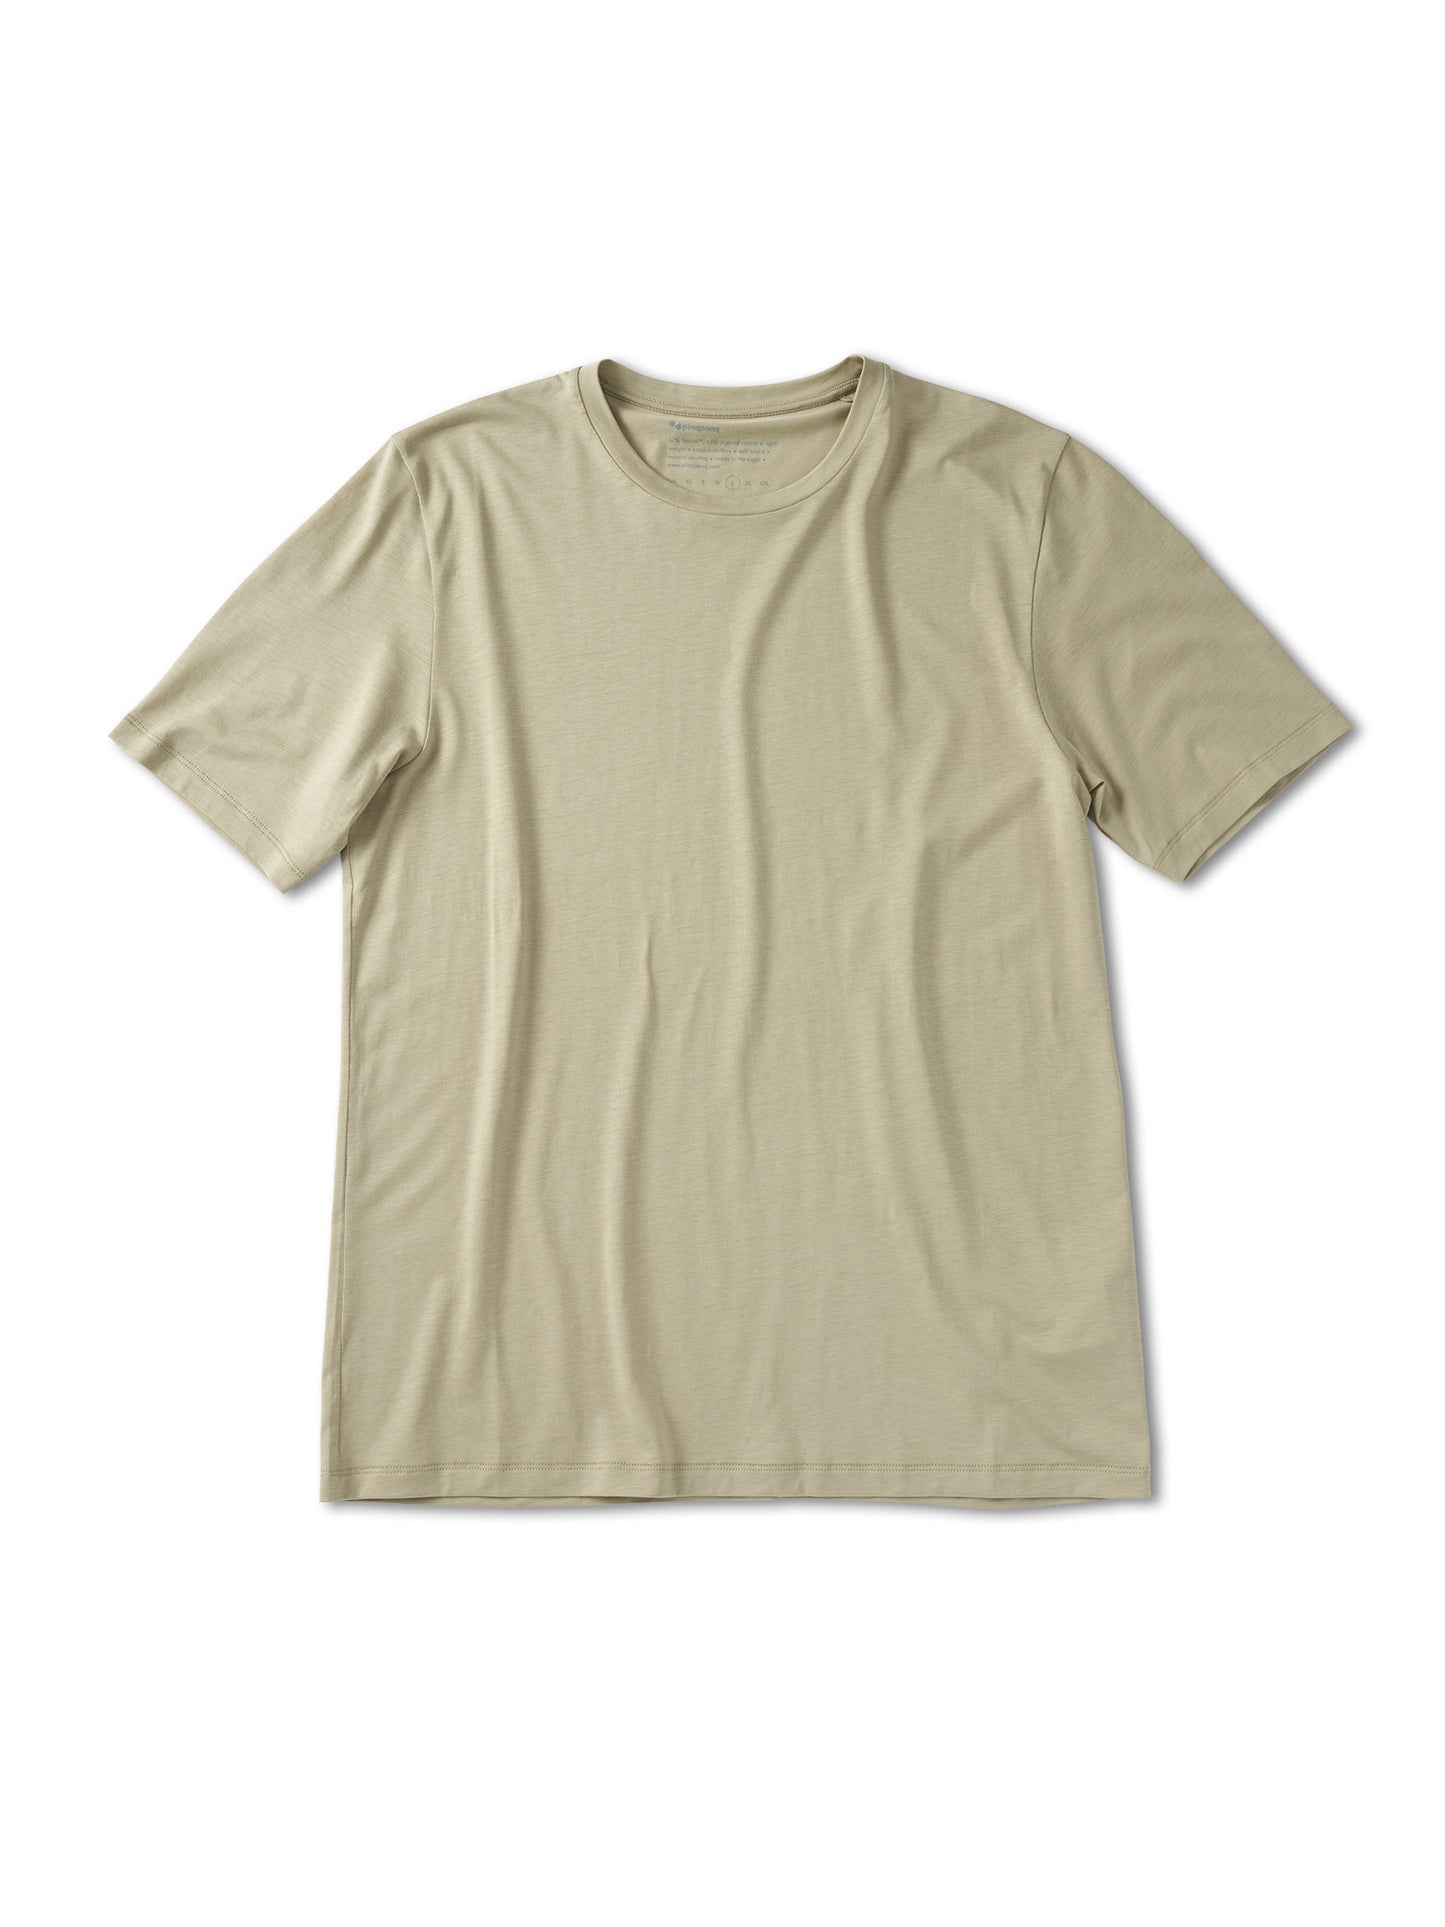 -pinqponq-Tshirt-Tencel-Cotton-Men-Iconic-Wooden-Olive-front